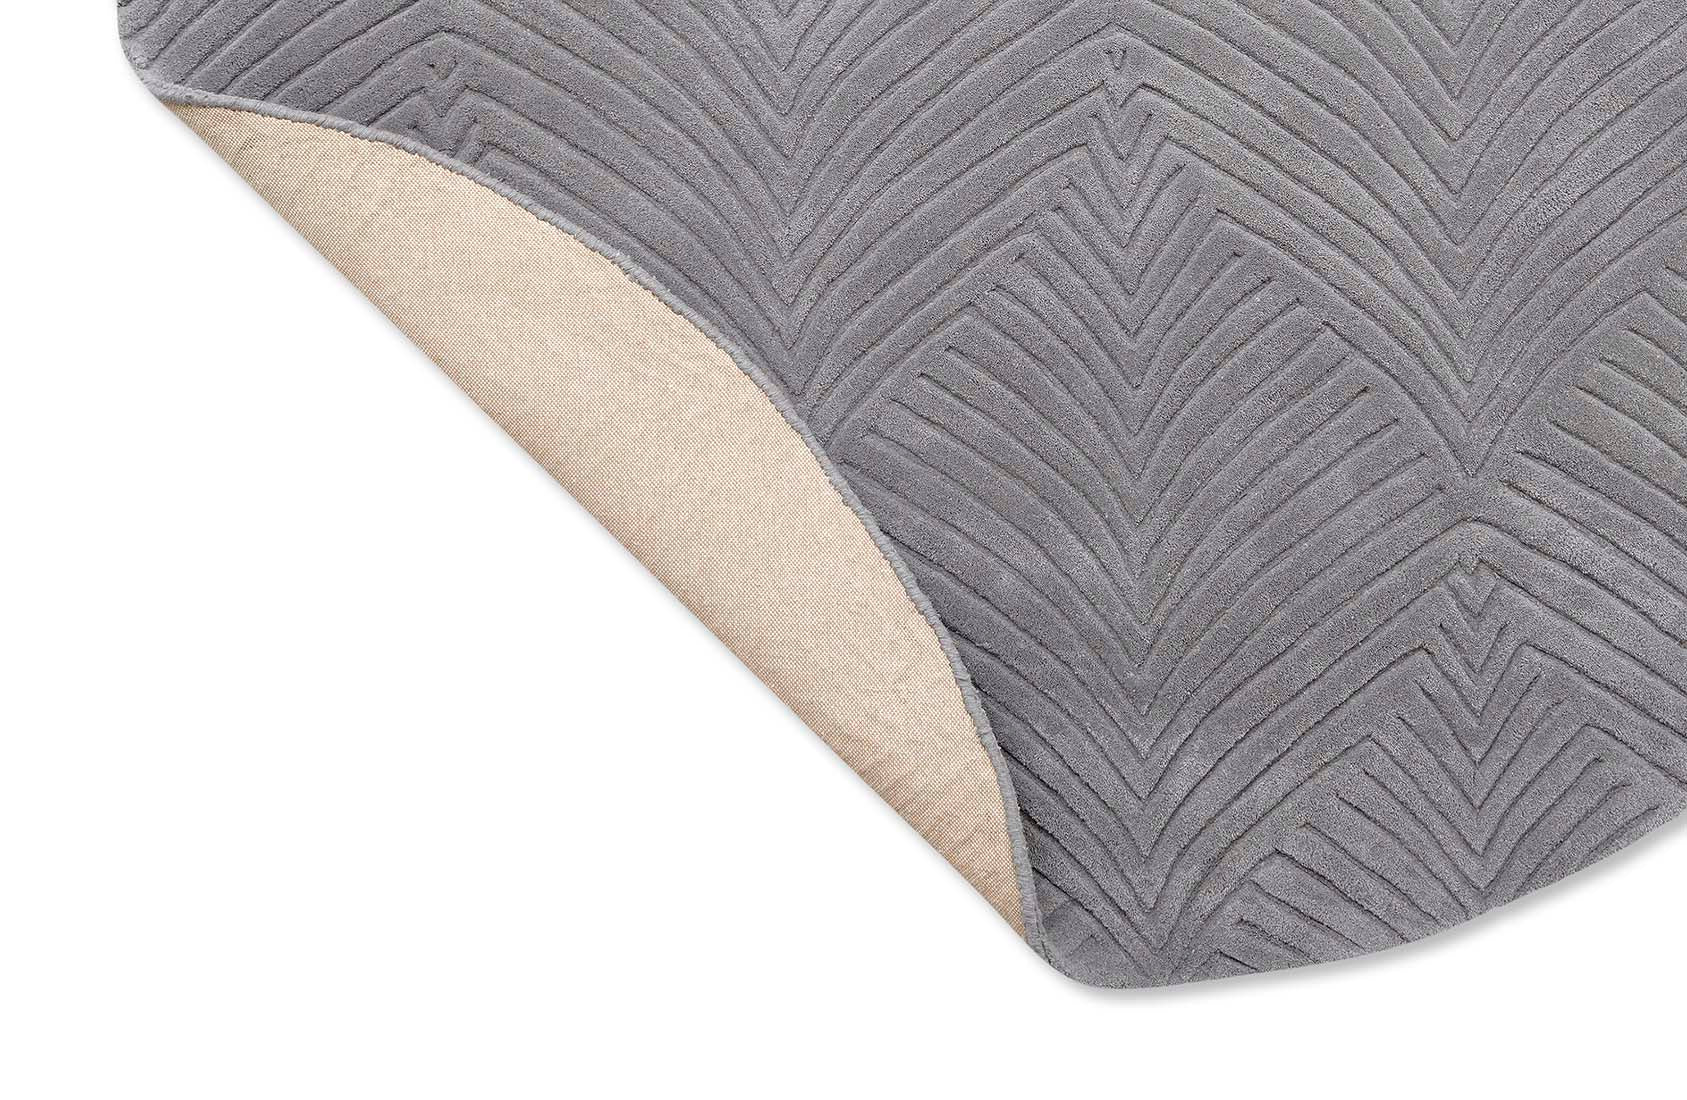 Circular grey rug with engraved leaf pattern
